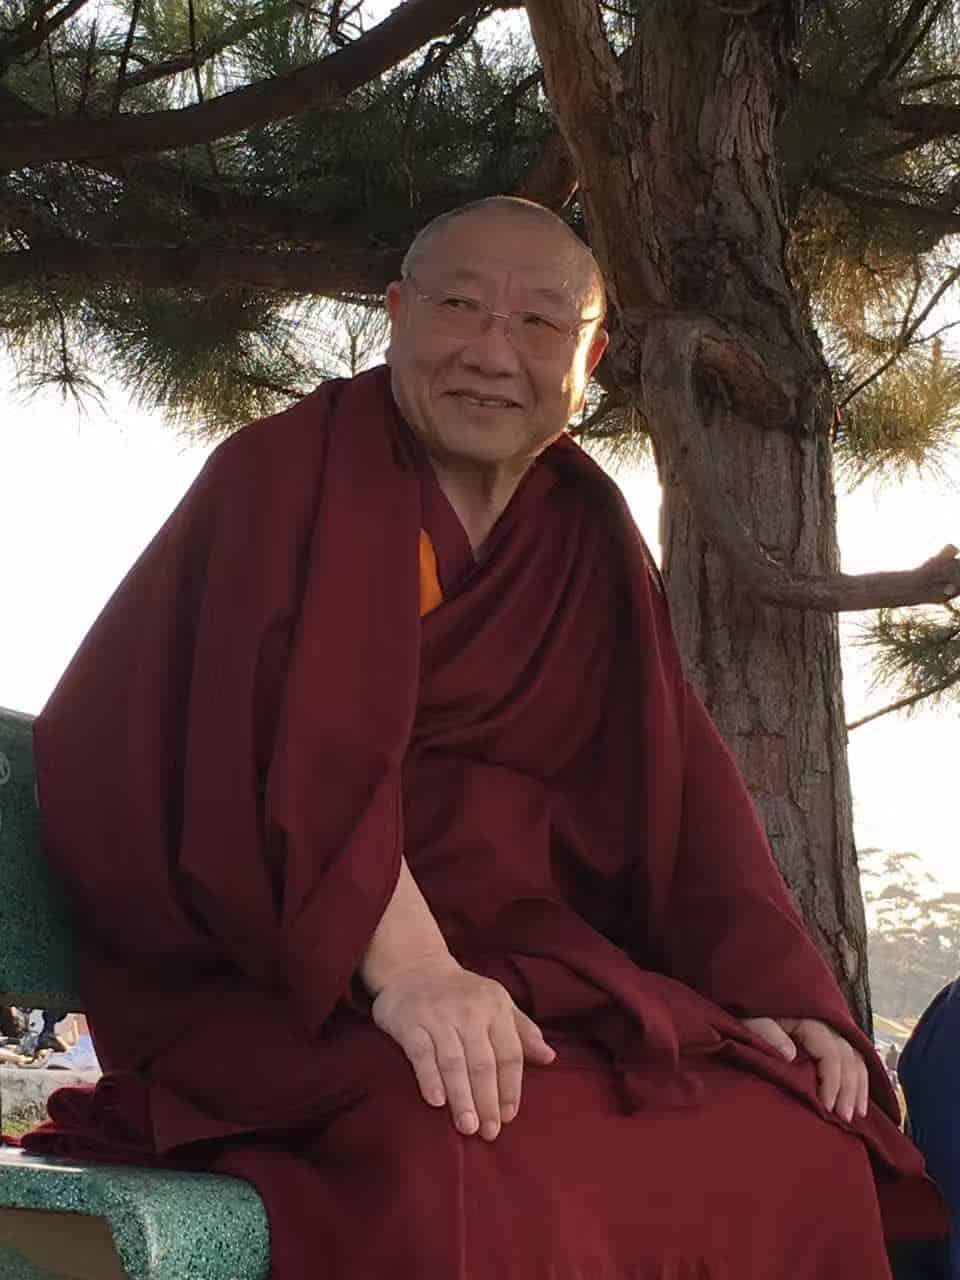 Gosok Rinpoche Vietnam 2017-03-07 65bfb8d729115b5e9186d6f8c5991c2